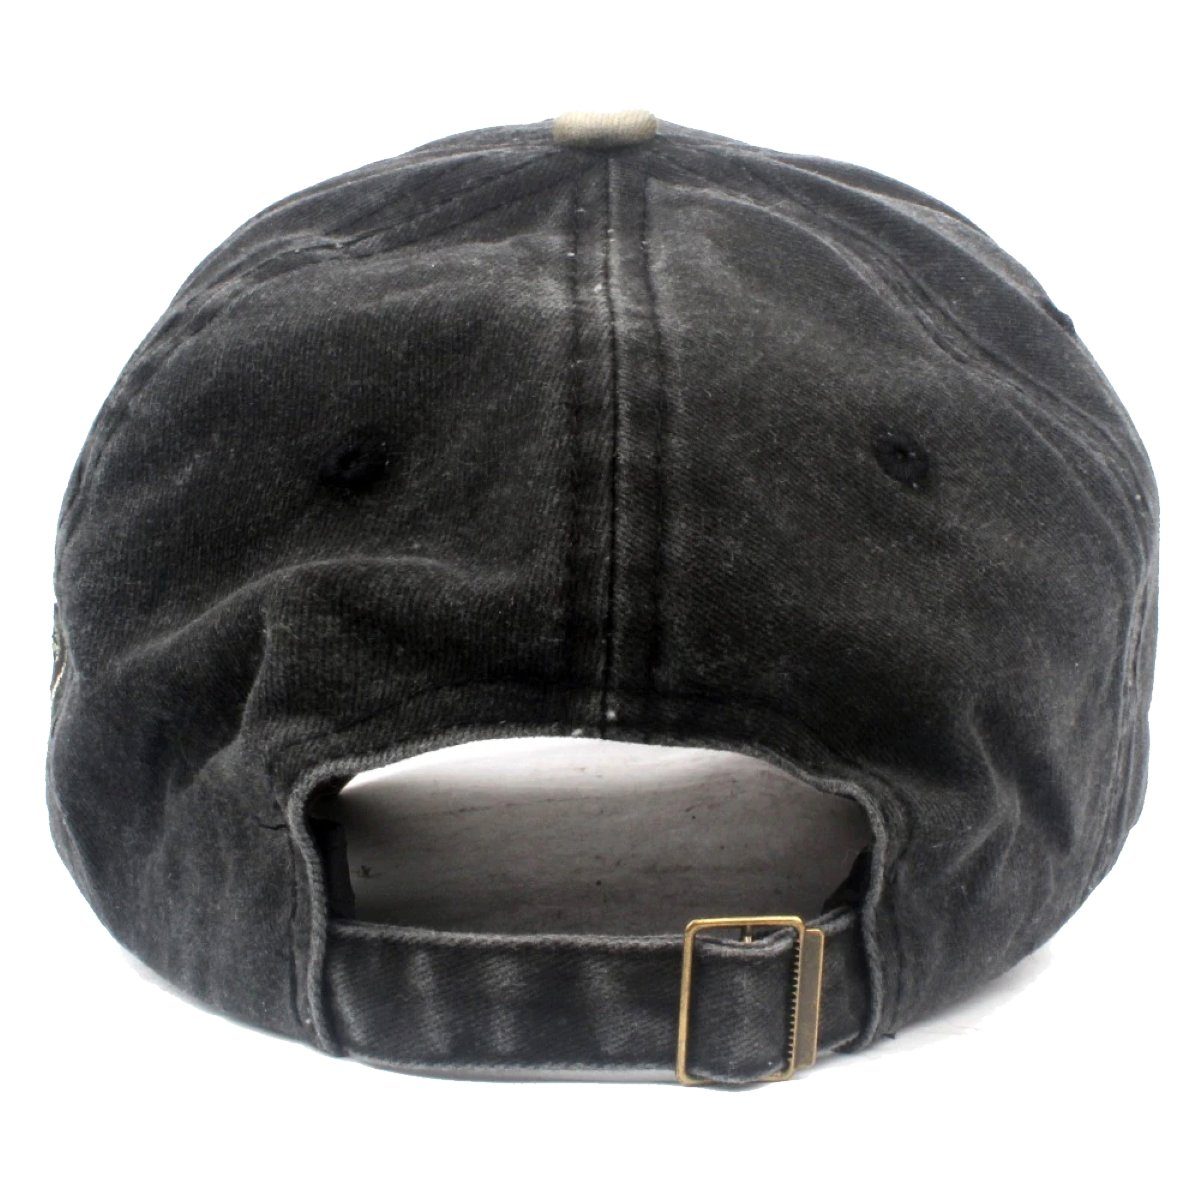 Belüftungslöchern Vintage Kappe schwarz Washed Used Cap Eagle Sporty mit Baseball Retro Cap Style Look